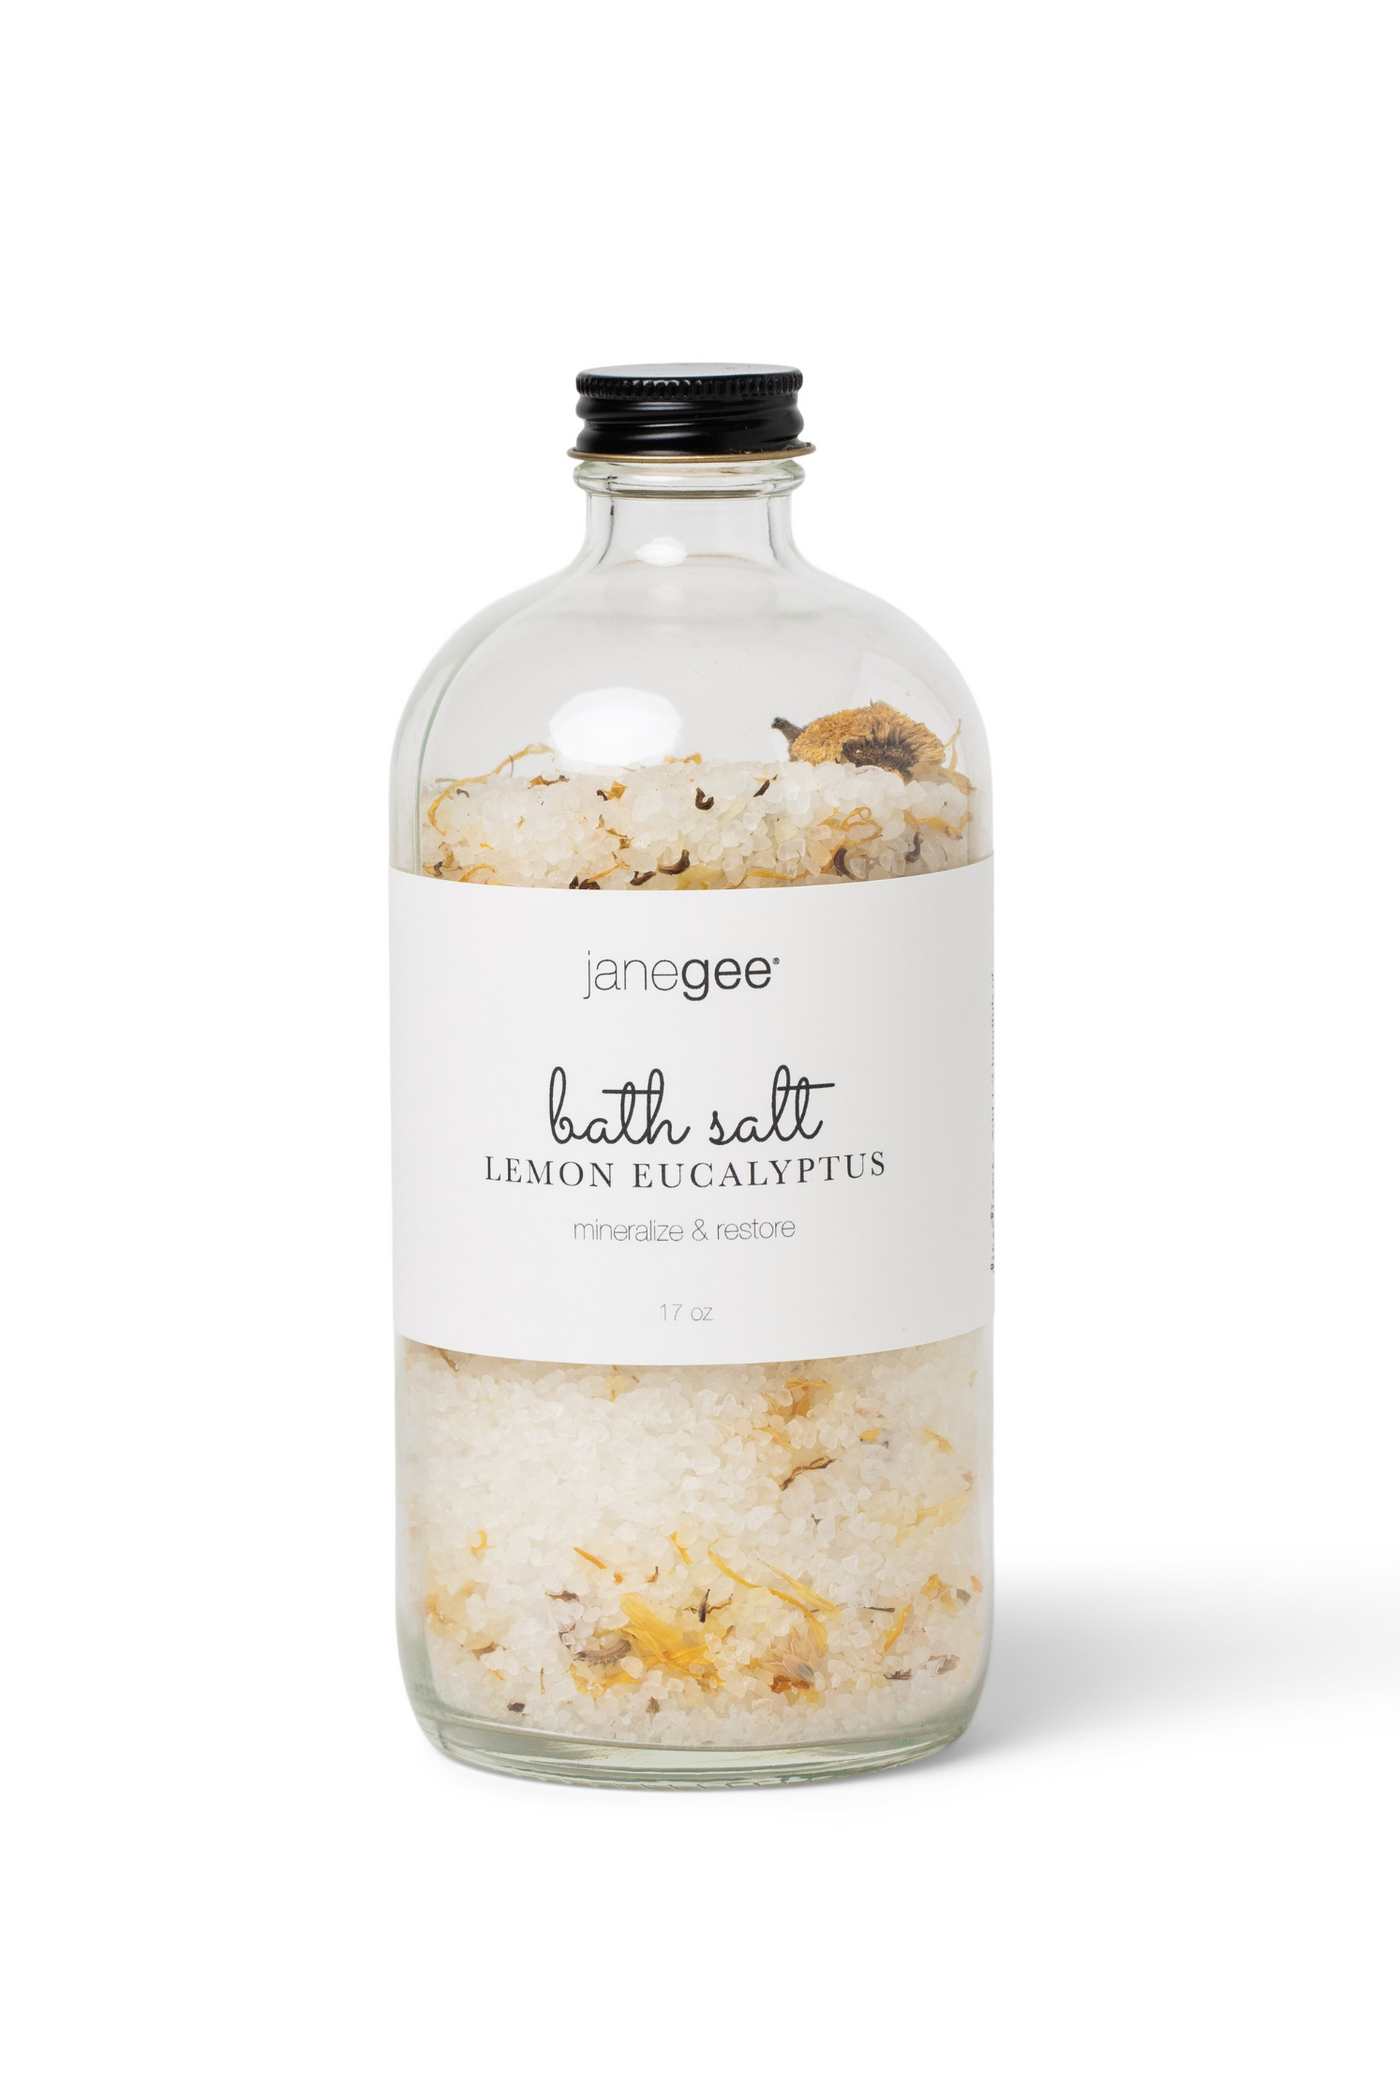 janegee Lemon Eucalyptus Bath Salt